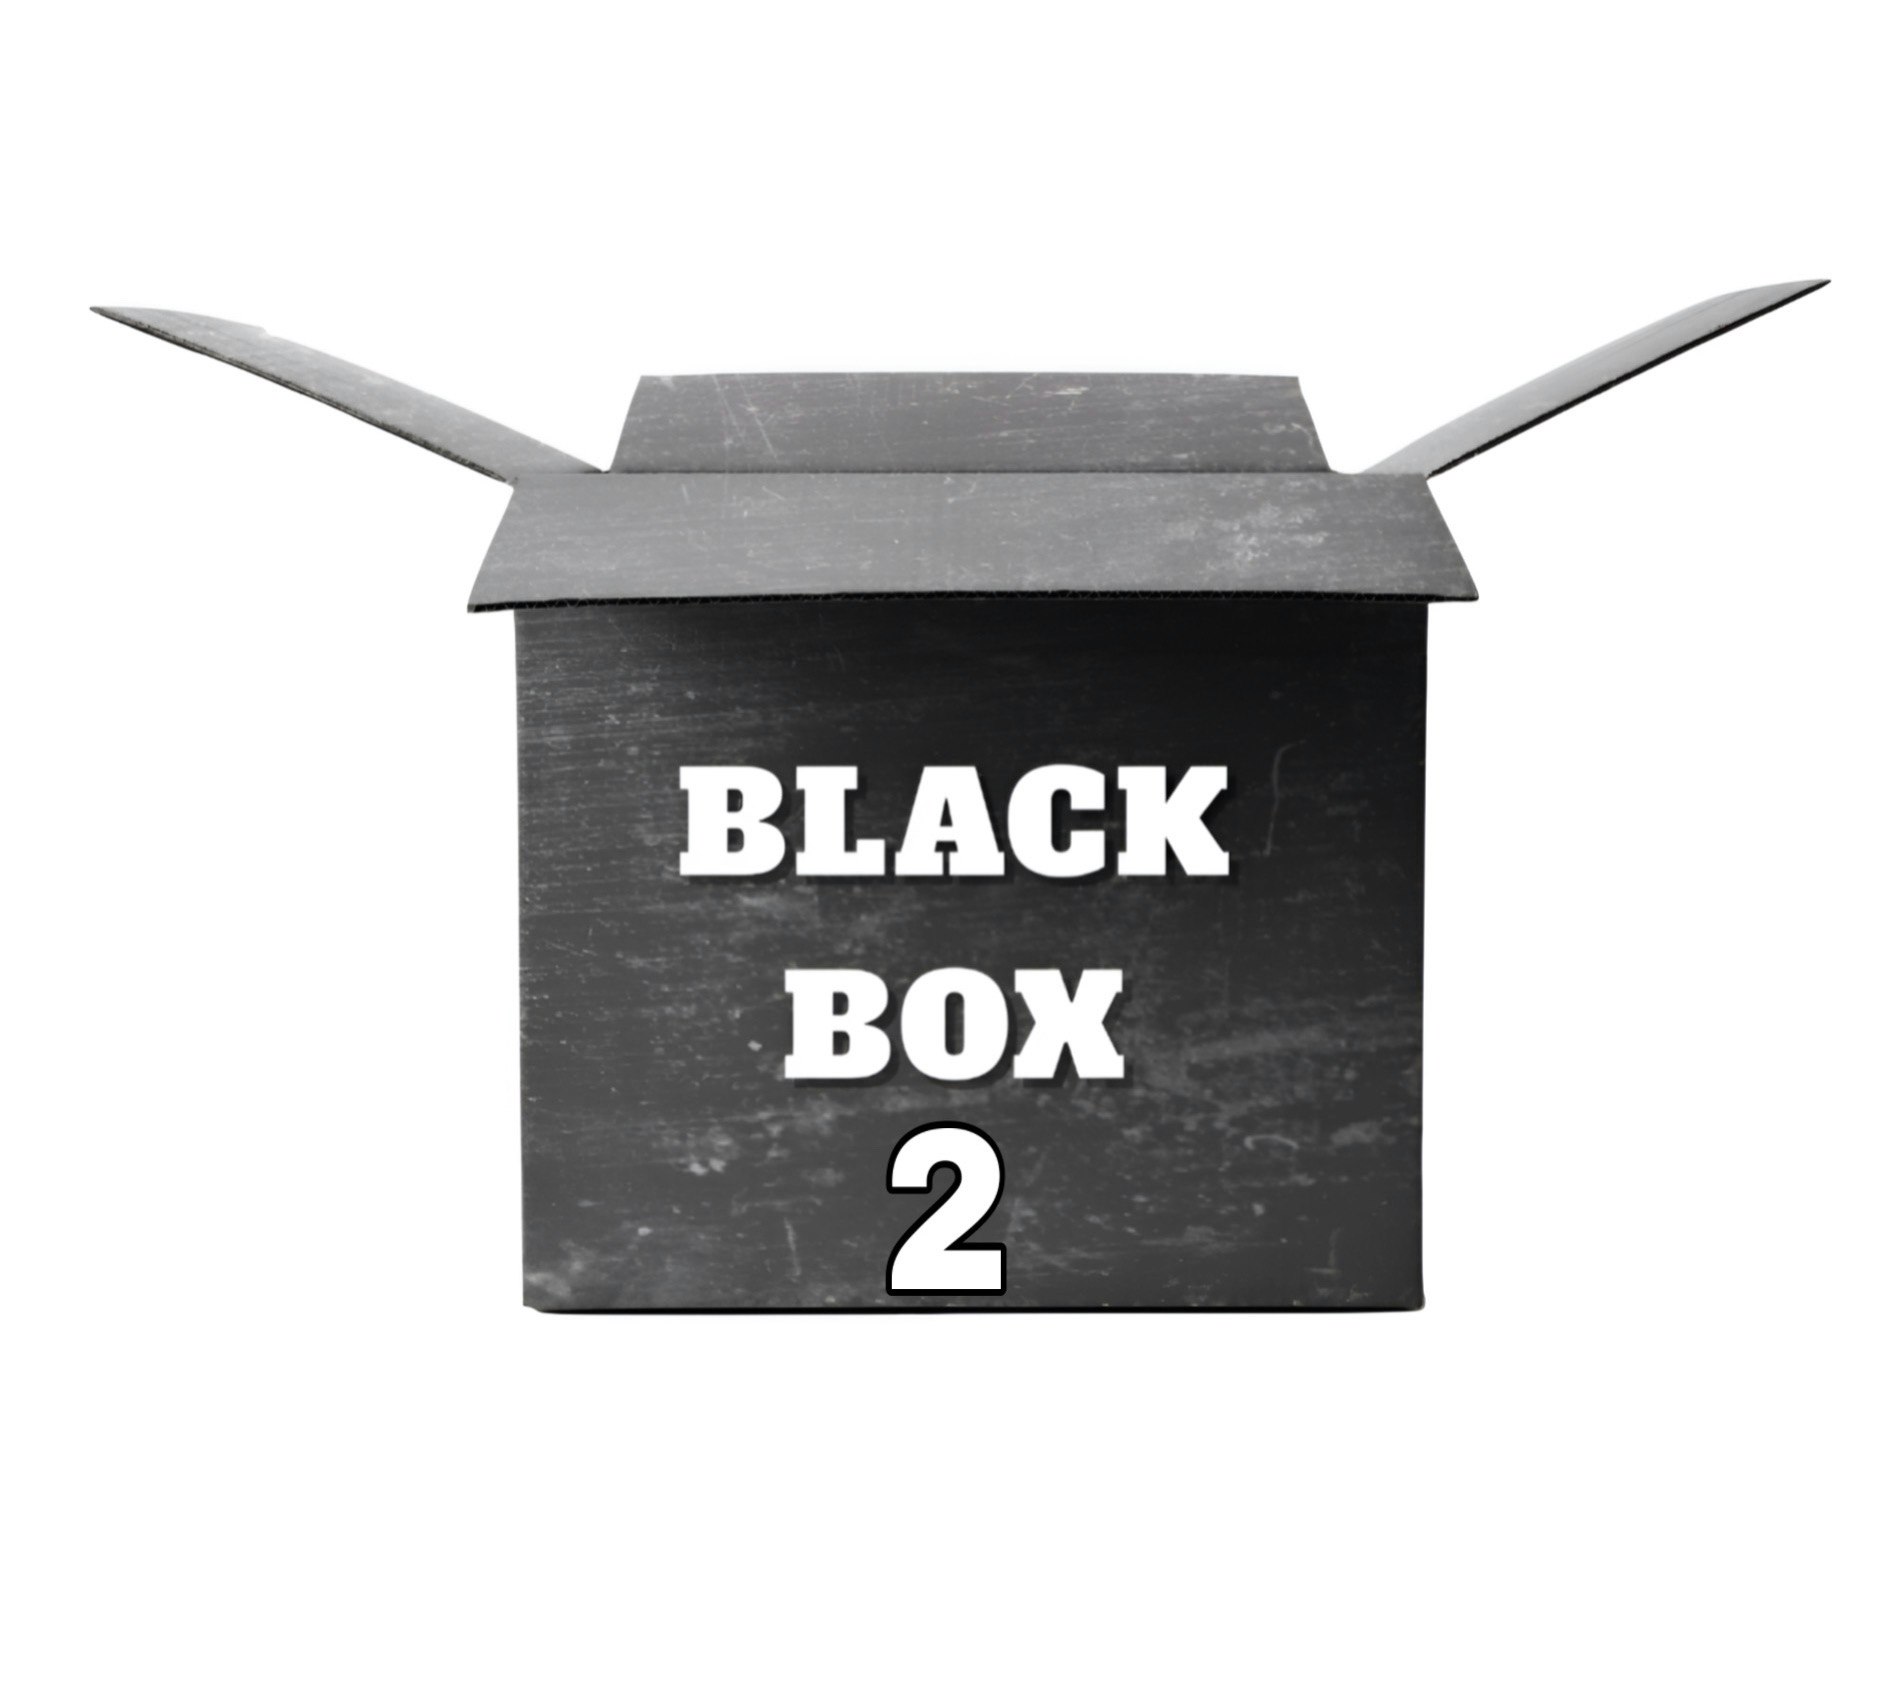 Black box 2